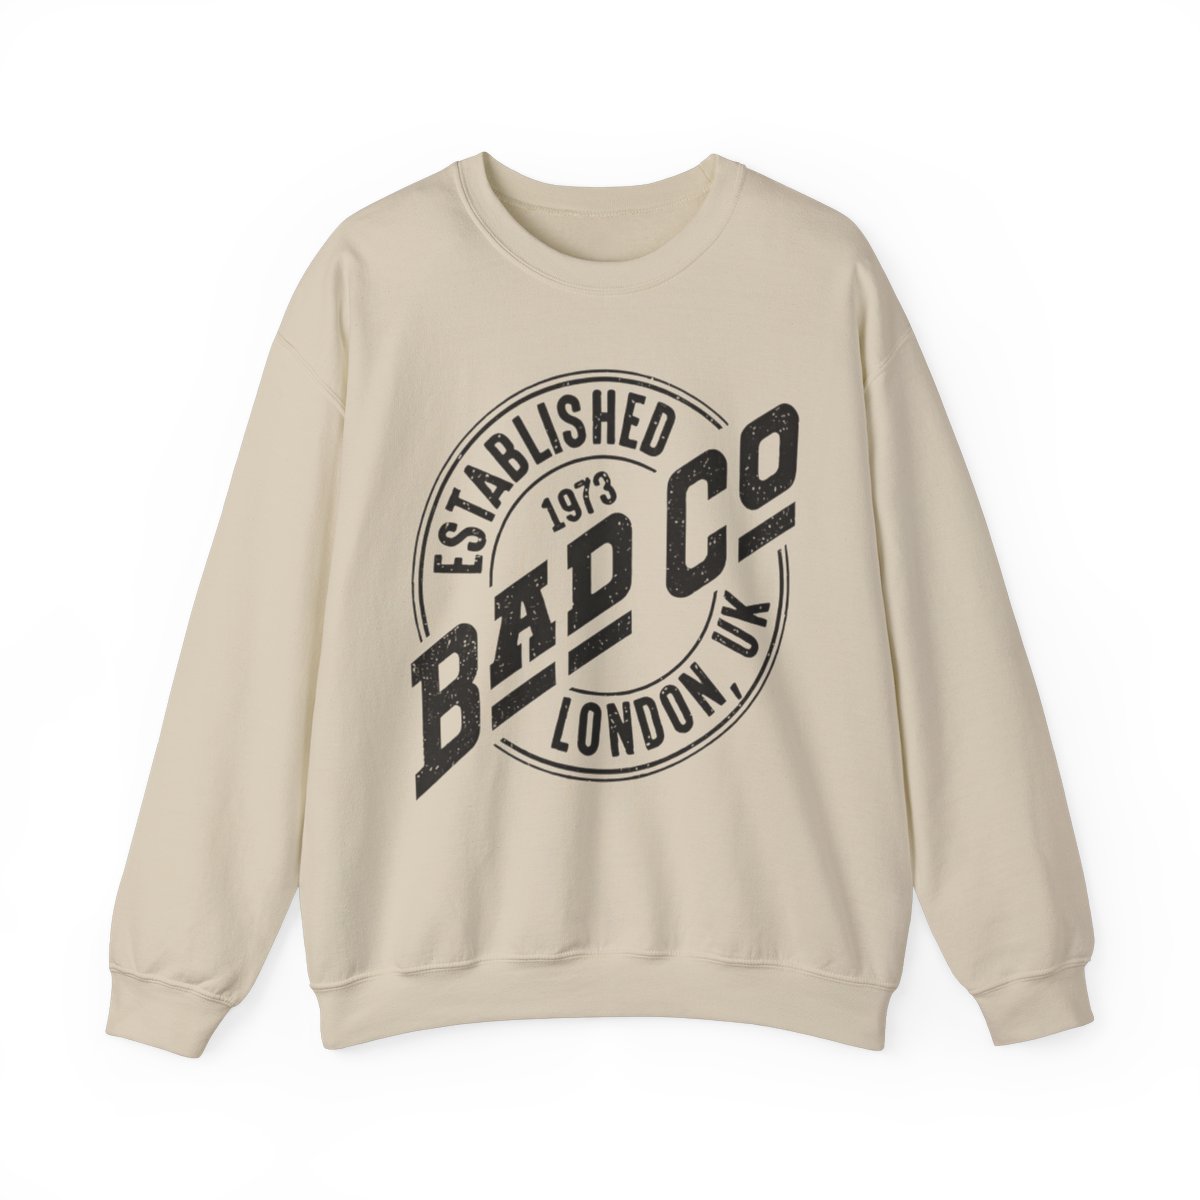 Bad Company Established in London Shirt 1973 UK Heart Rock Band Unisex Heavy Blend Crewneck Sweatshirt